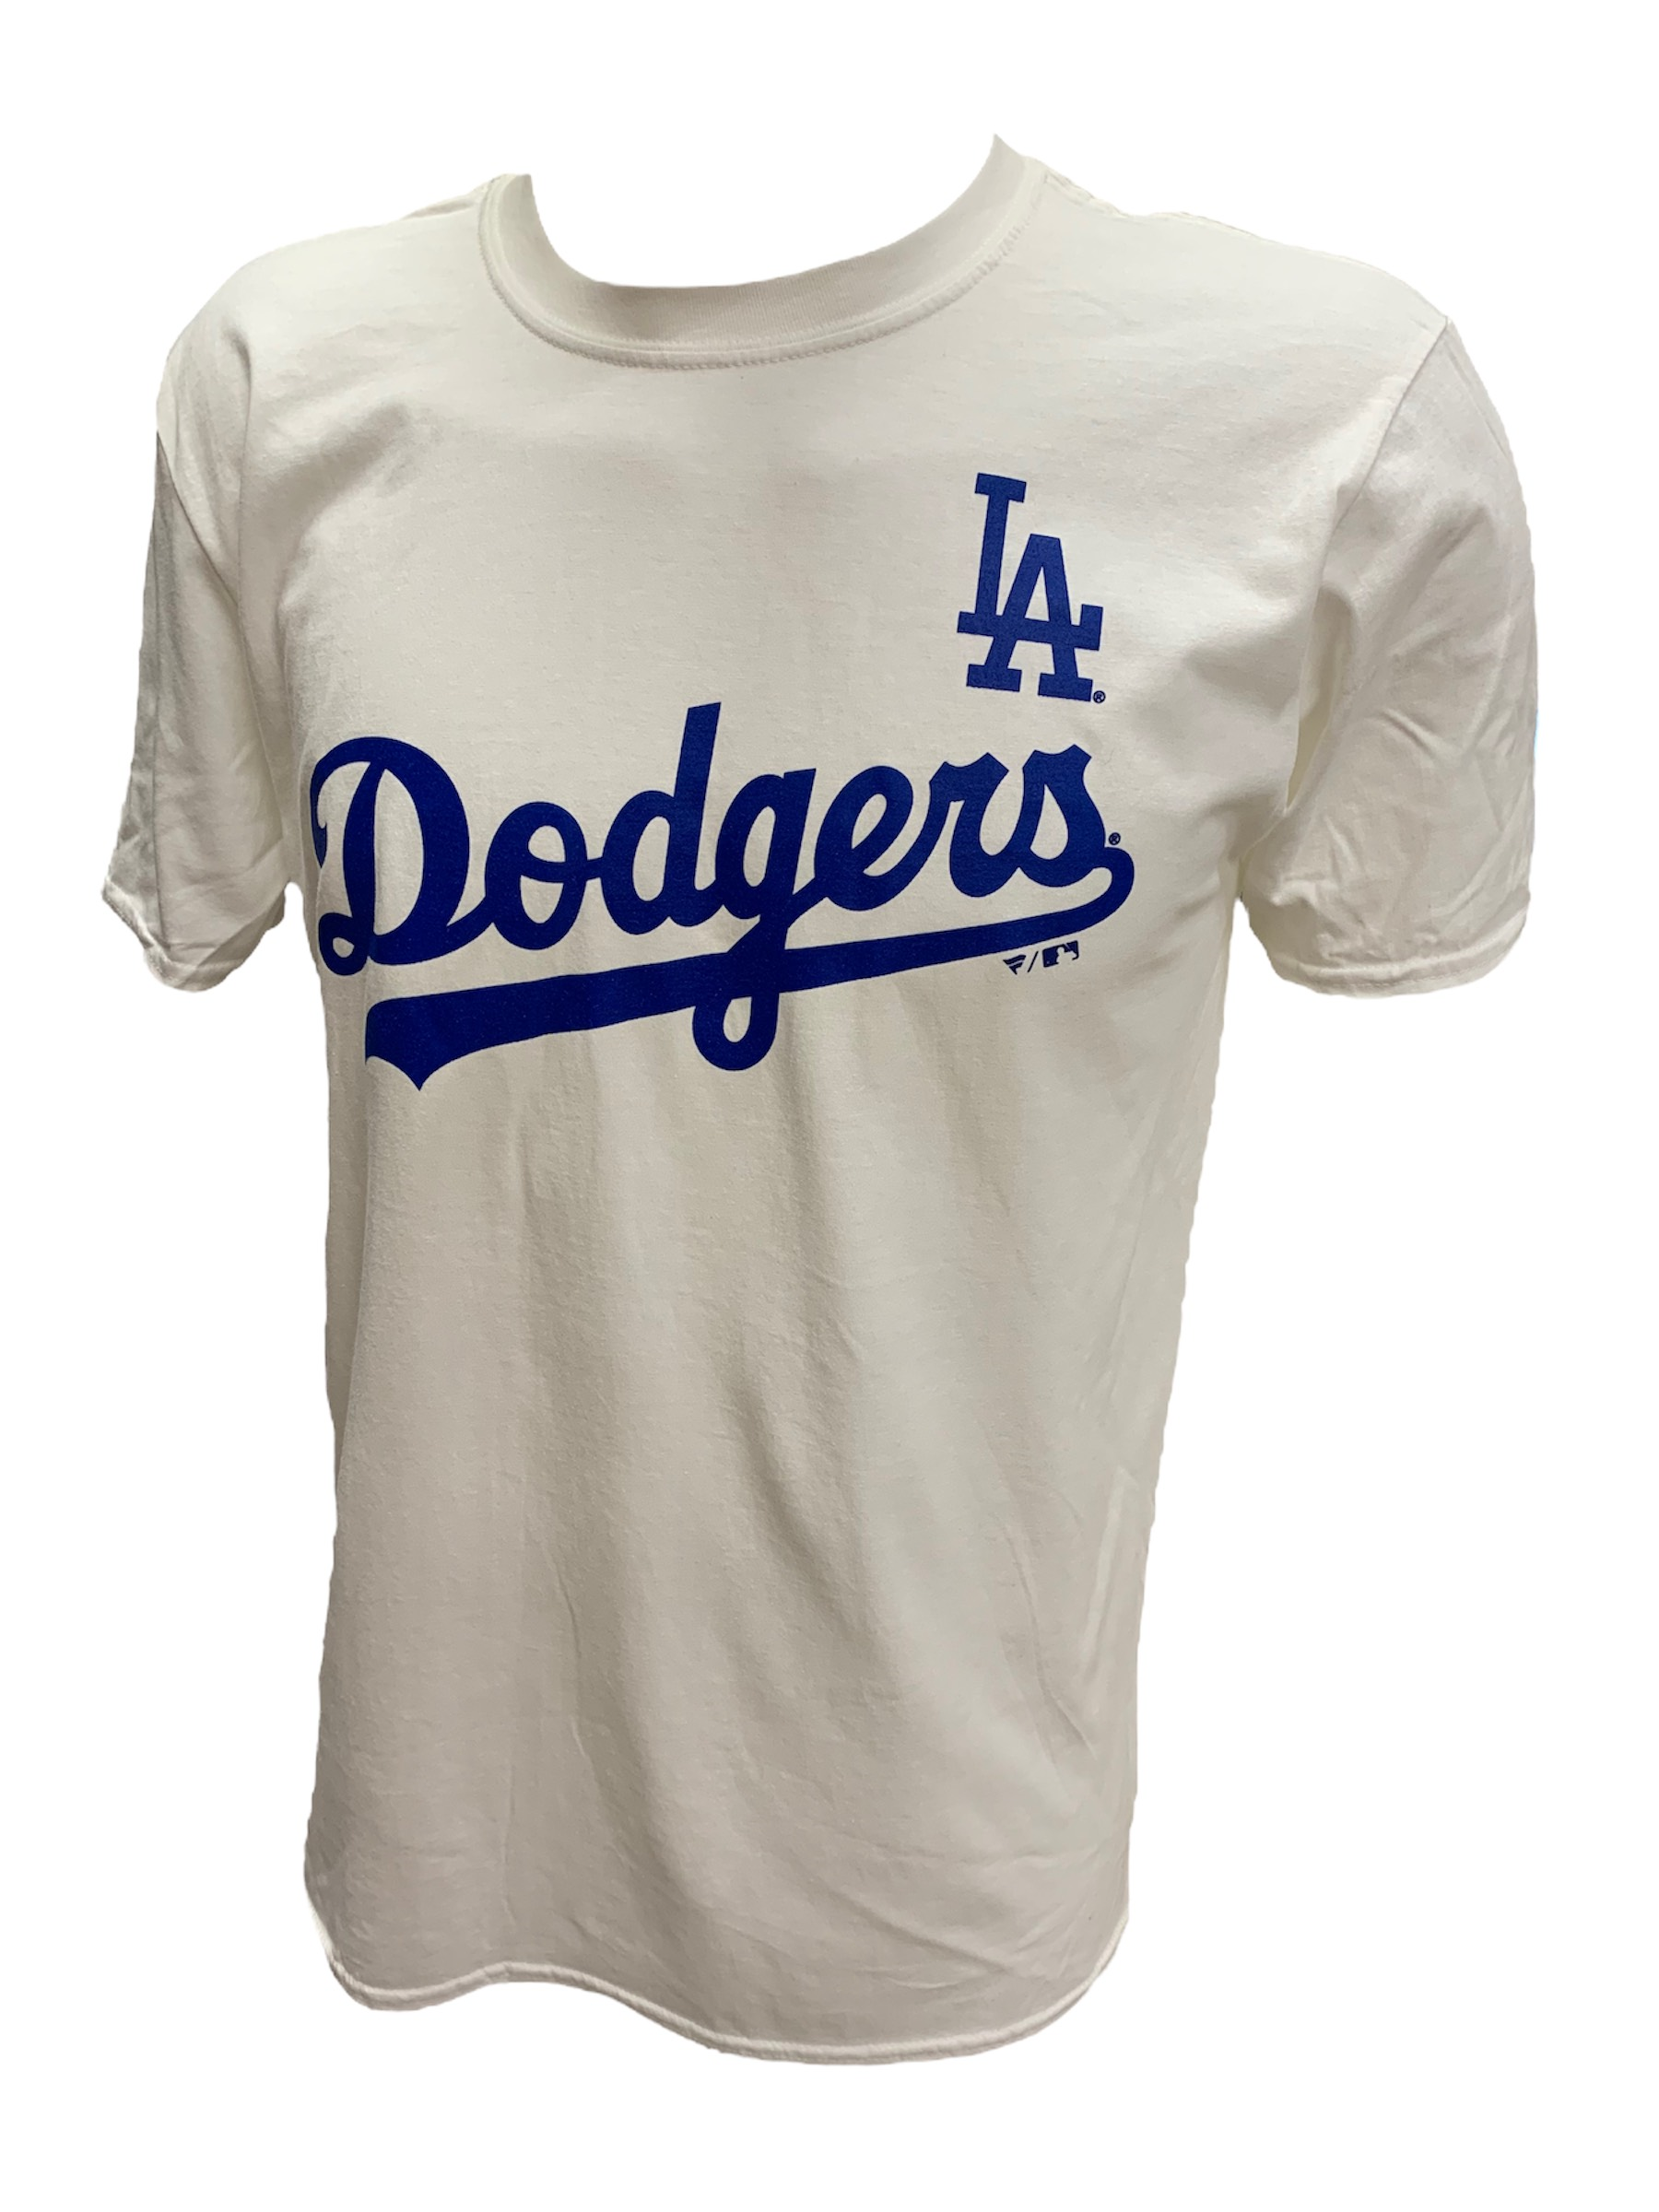 L.A. Dodgers Apparel, Dodgers Gear, Merchandise